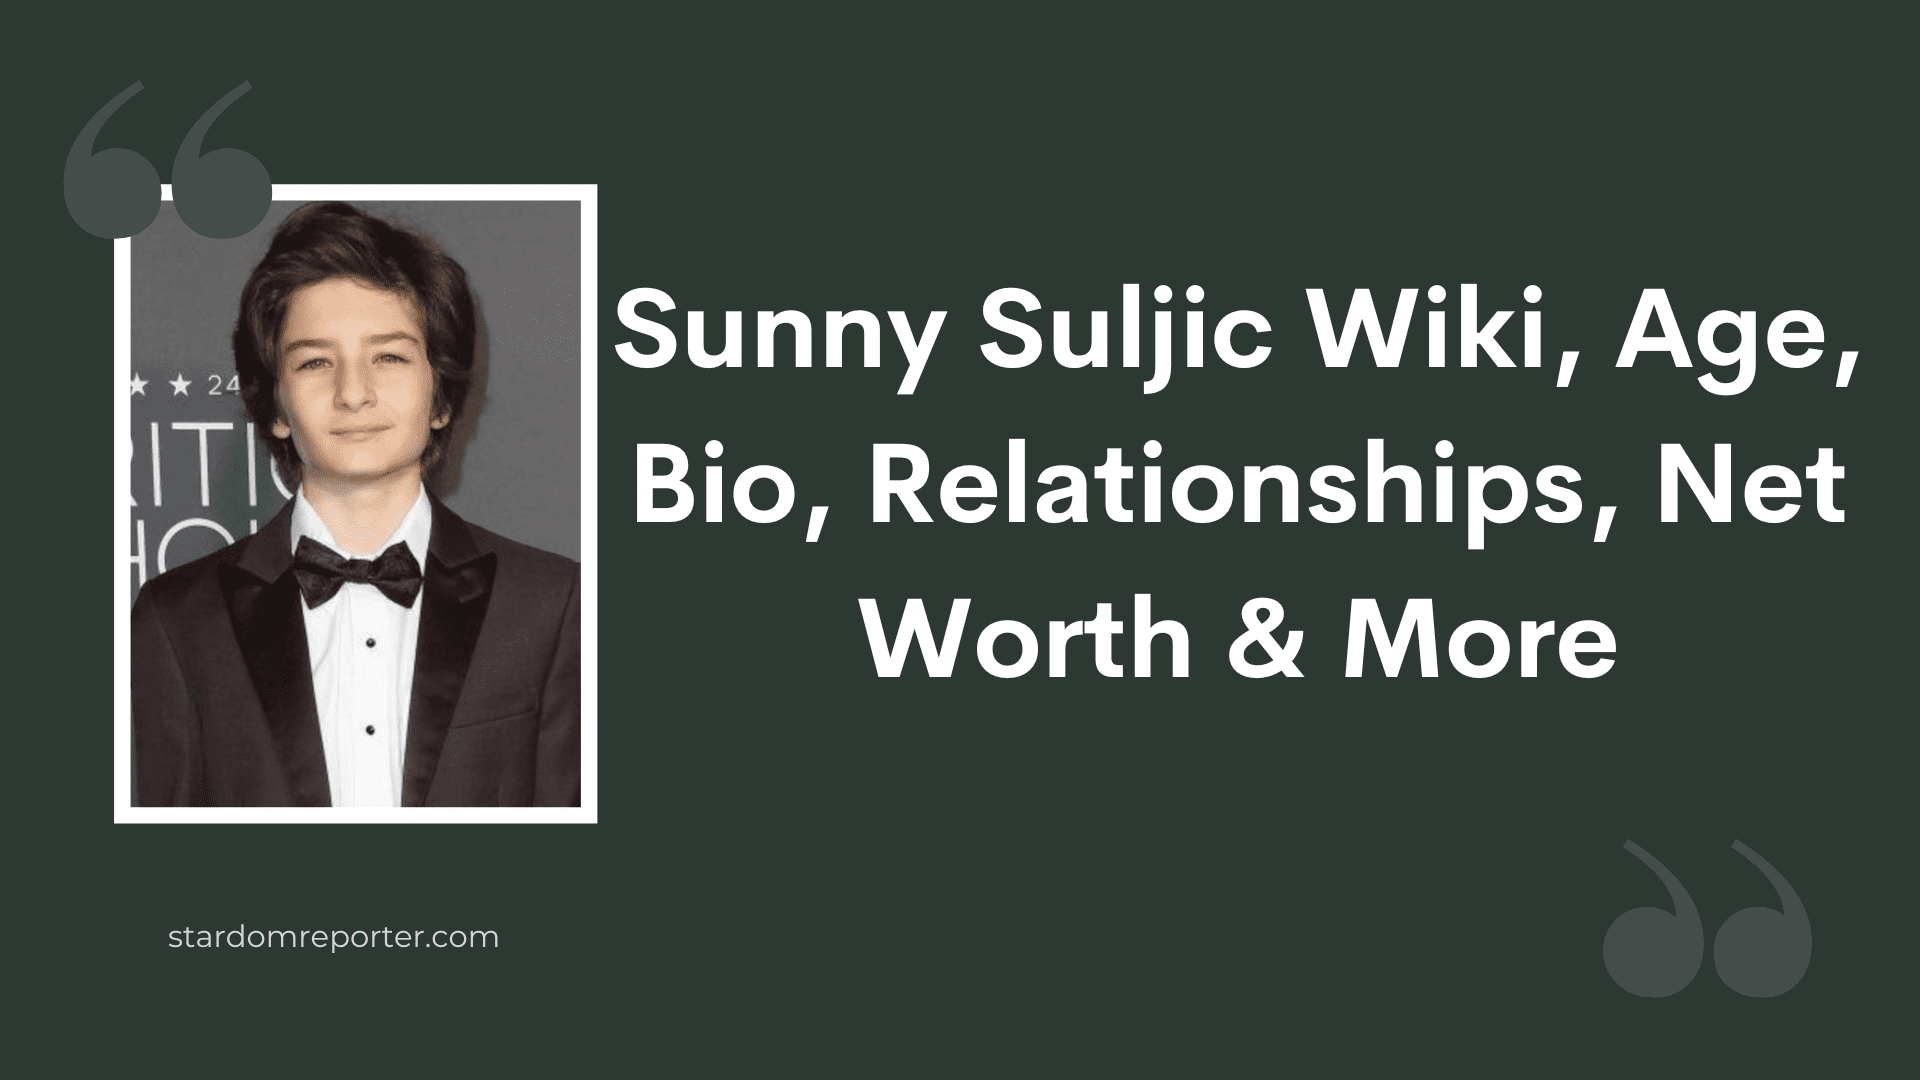 Sunny Suljic Wiki, Age, Bio, Relationships, Net Worth & More - 13